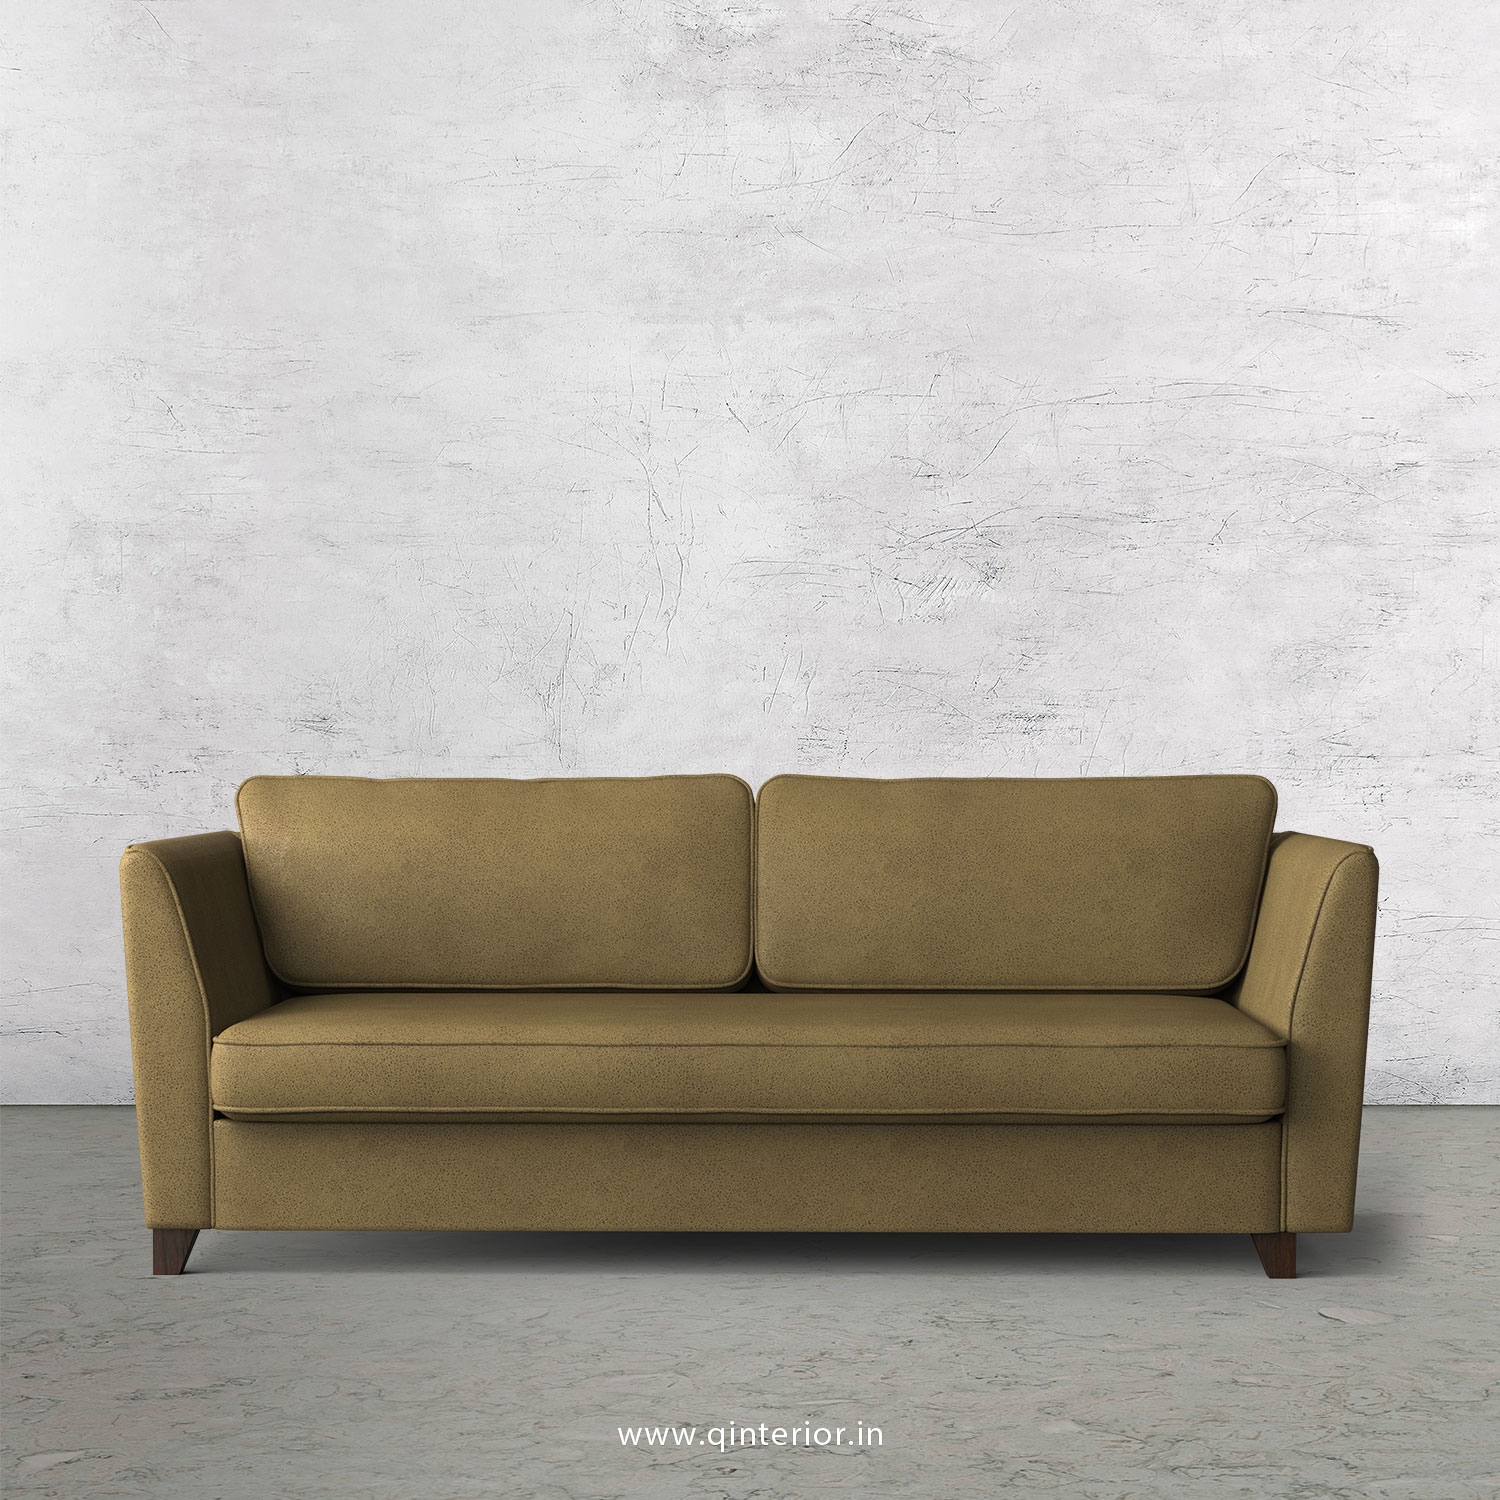 KINGSTONE 3 Seater Sofa in Fab Leather Fabric - SFA004 FL01